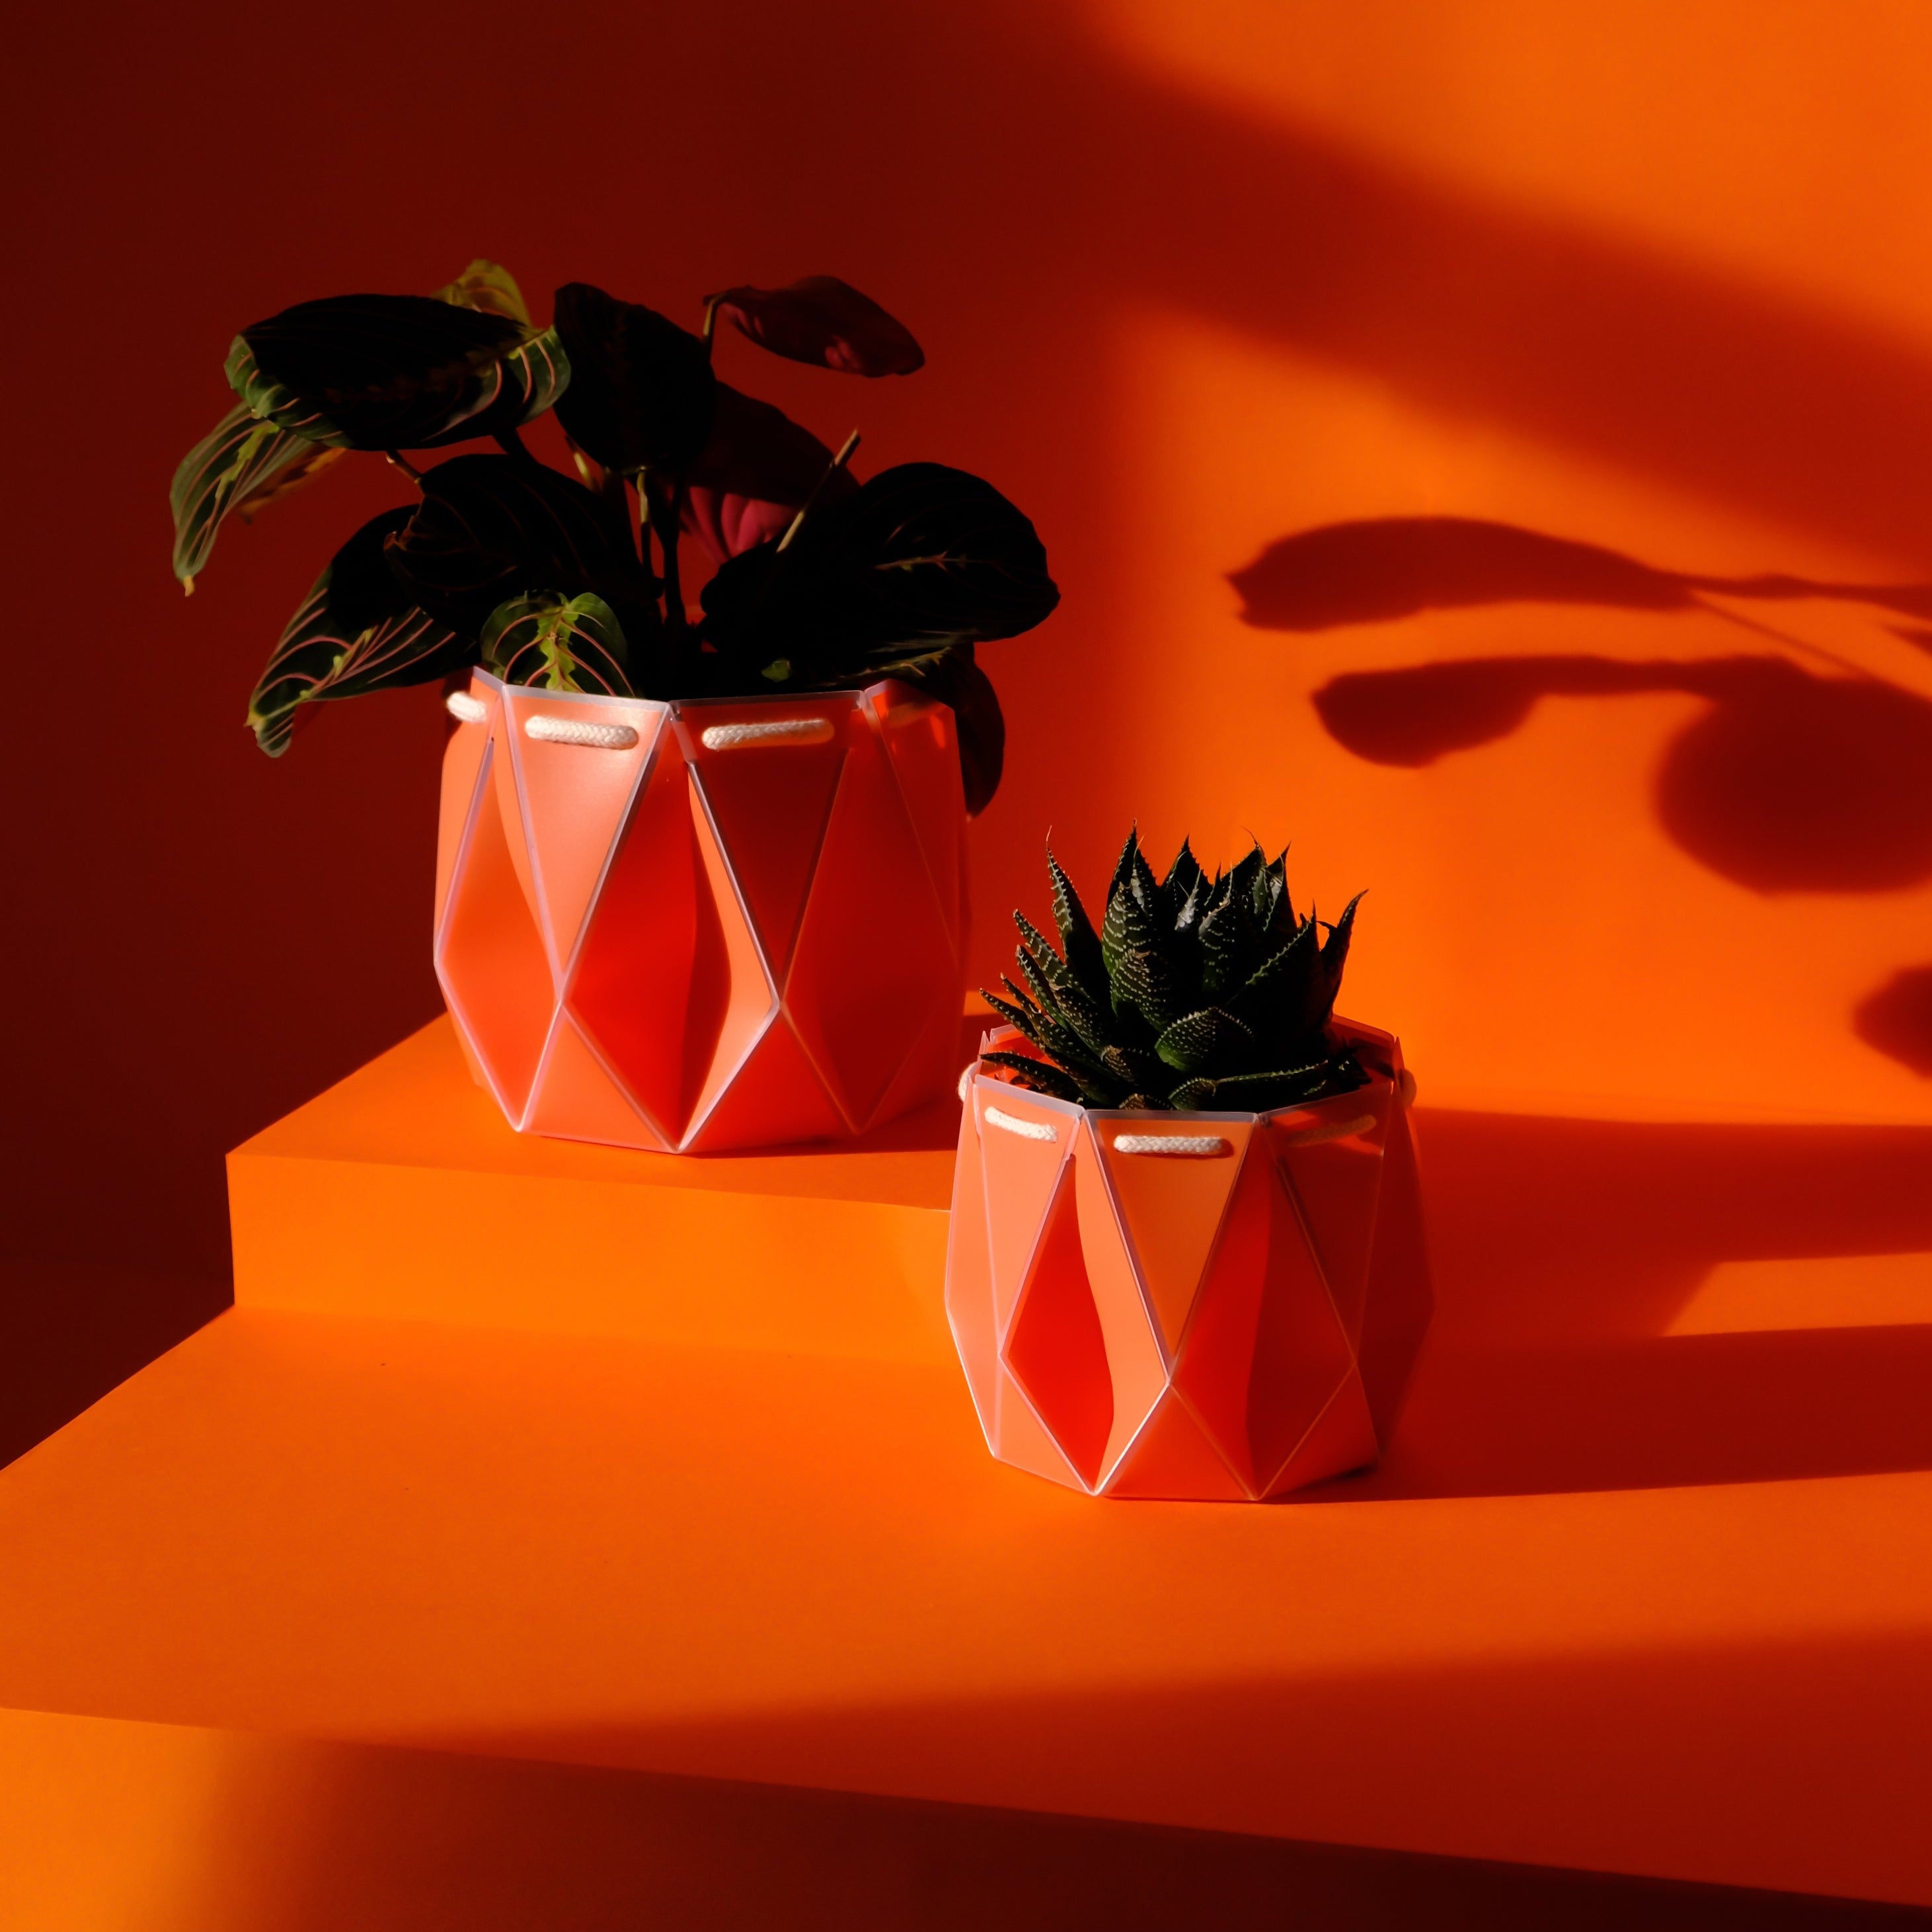 POTR Pot - Coral Orange 11cm